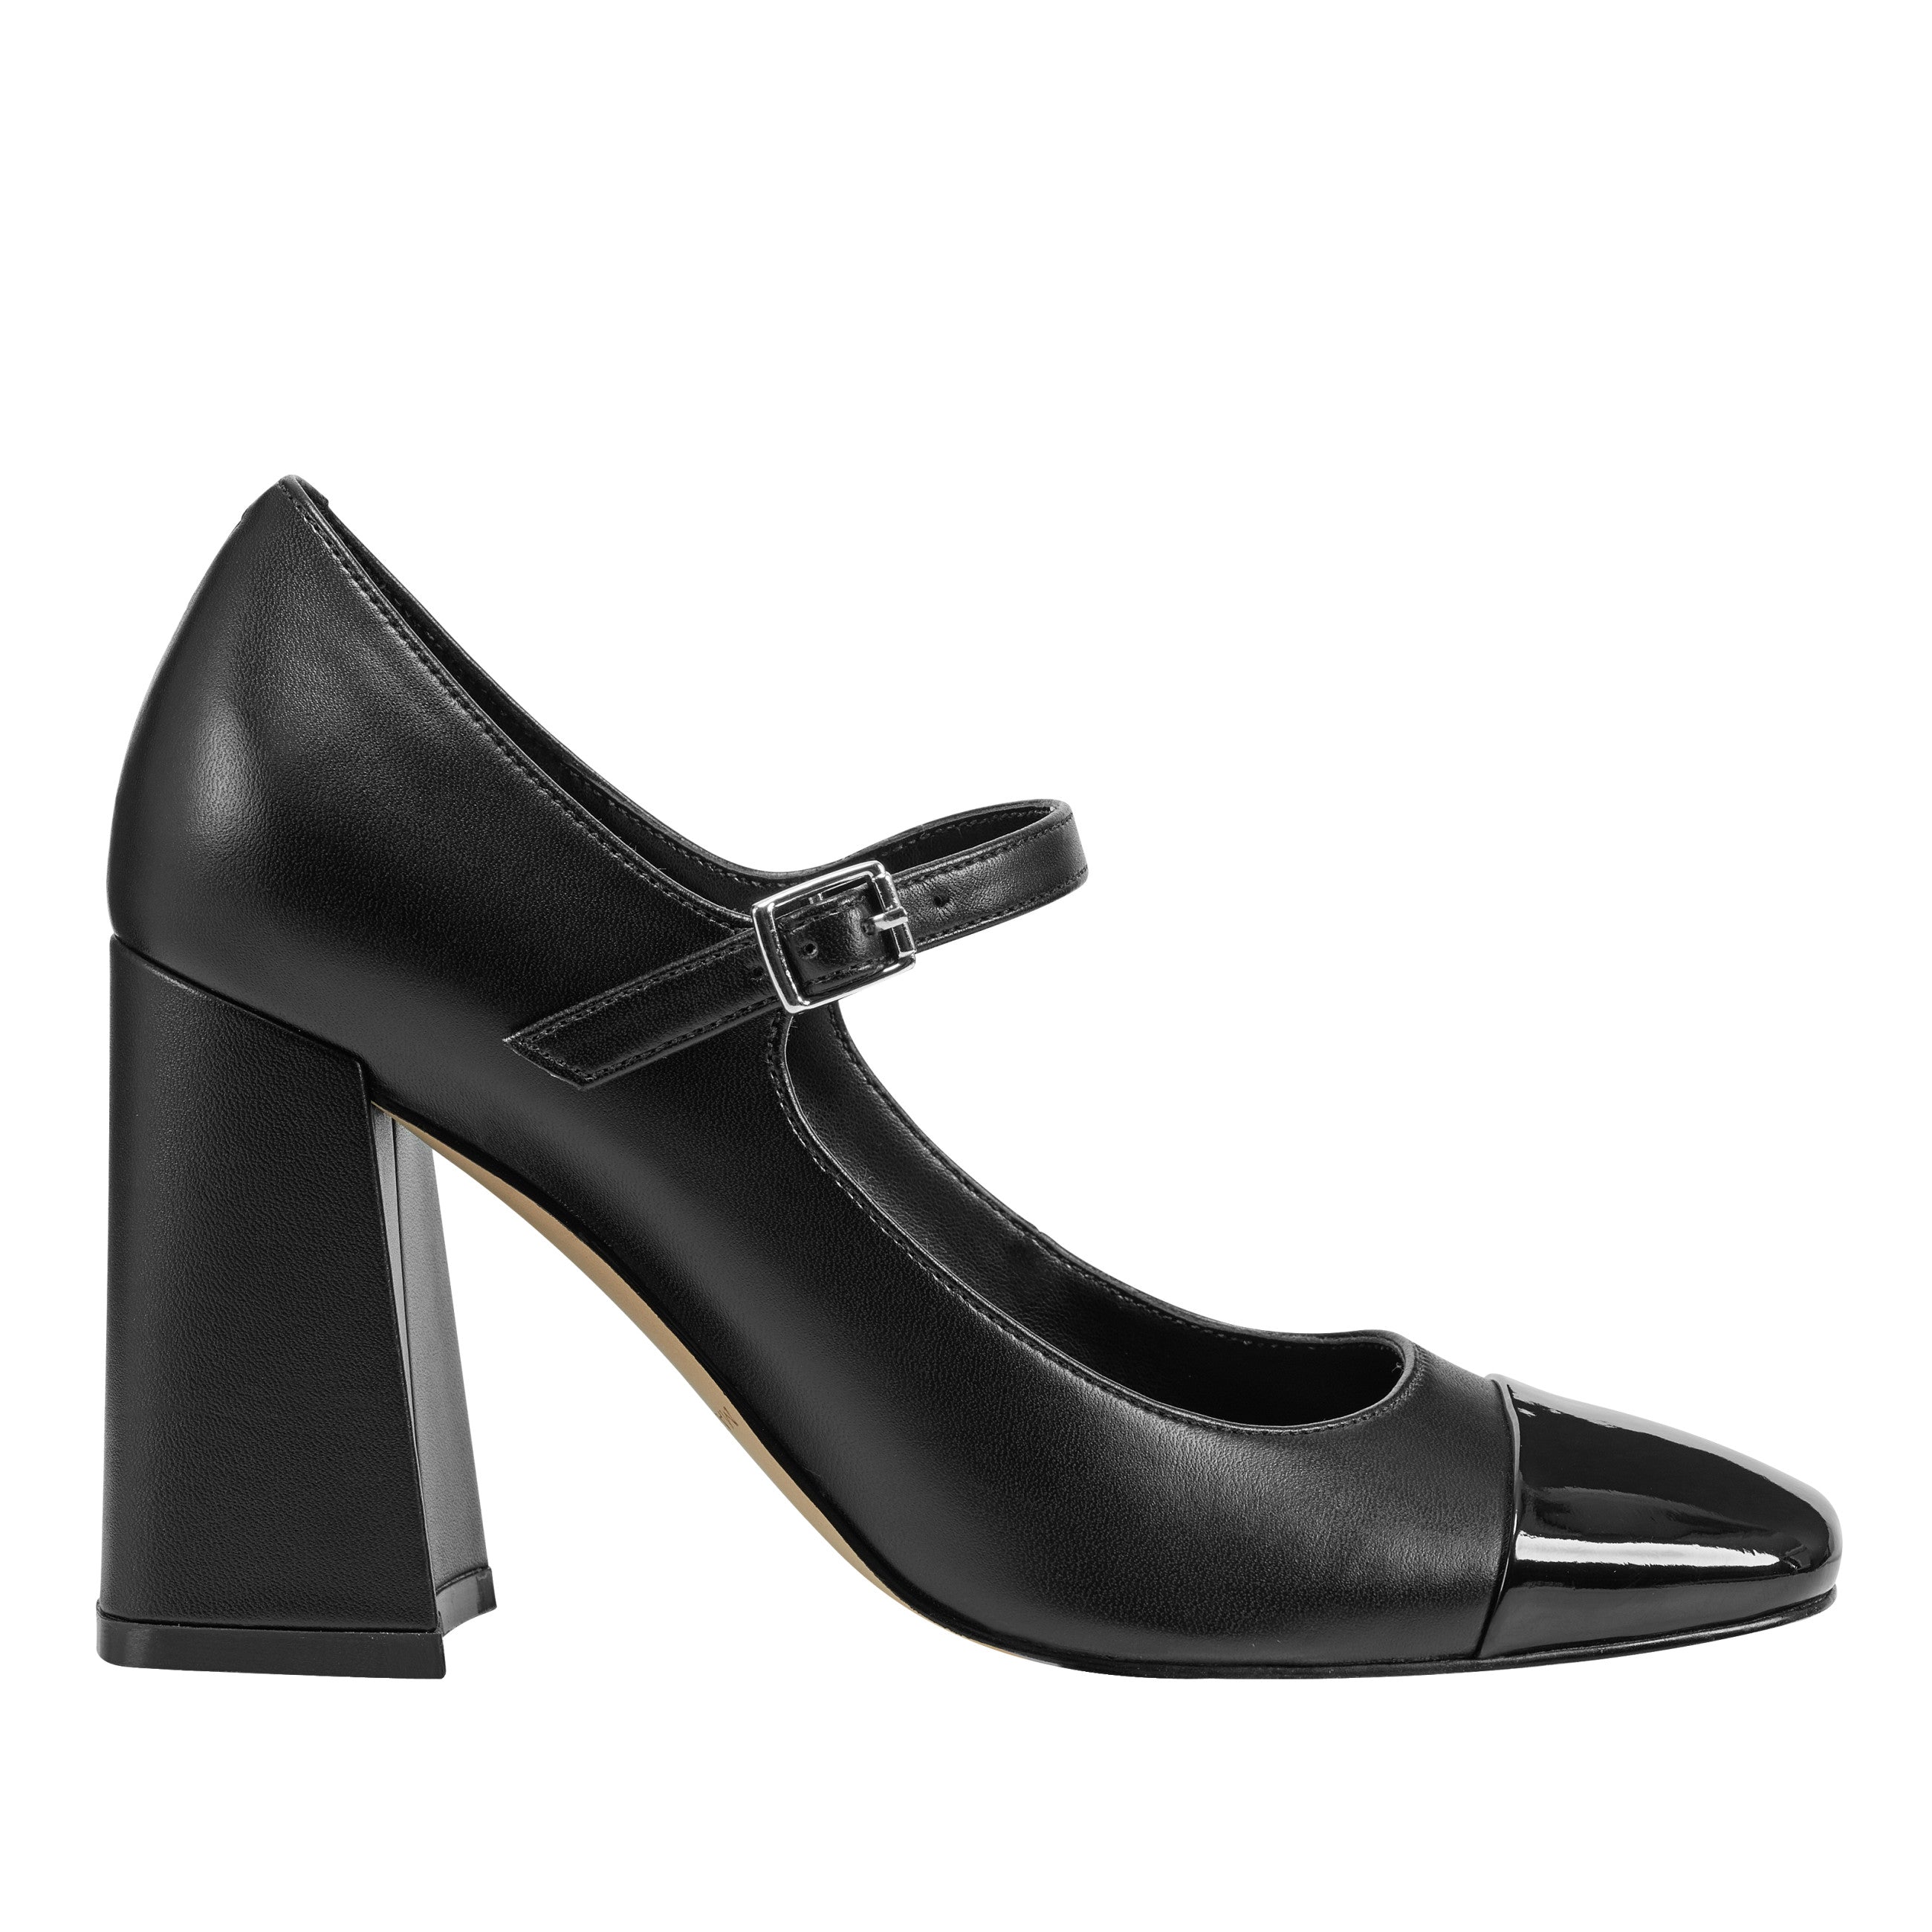 Black & Cream Patent Leatherette Mary Jane Heels – Unique Vintage